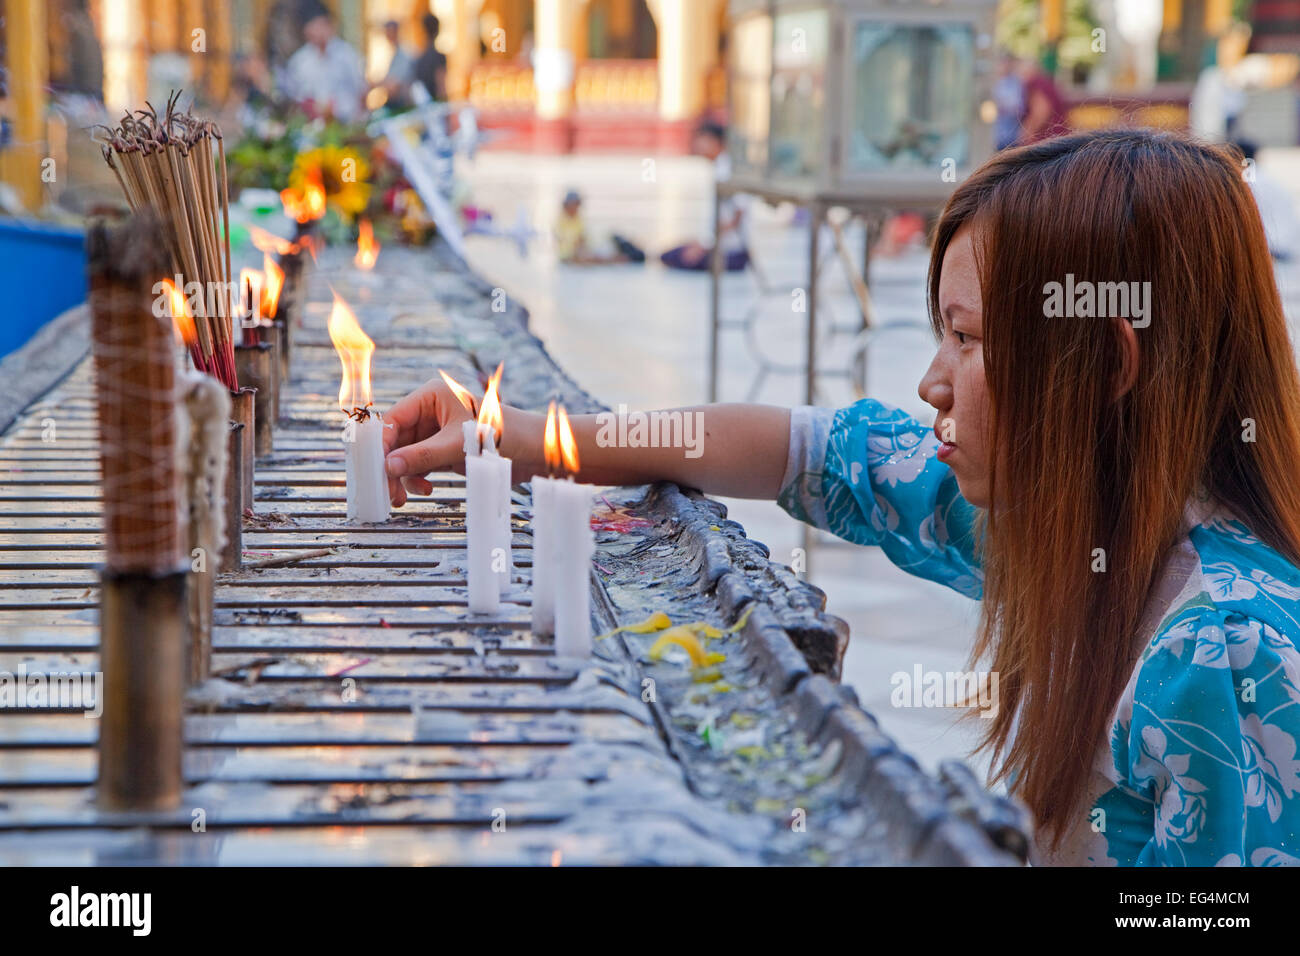 Ragazza birmano candele accese e bastoncini di incenso / joss bastoni in Zedi Shwedagon pagoda Daw a Yangon, Myanmar / Birmania Foto Stock